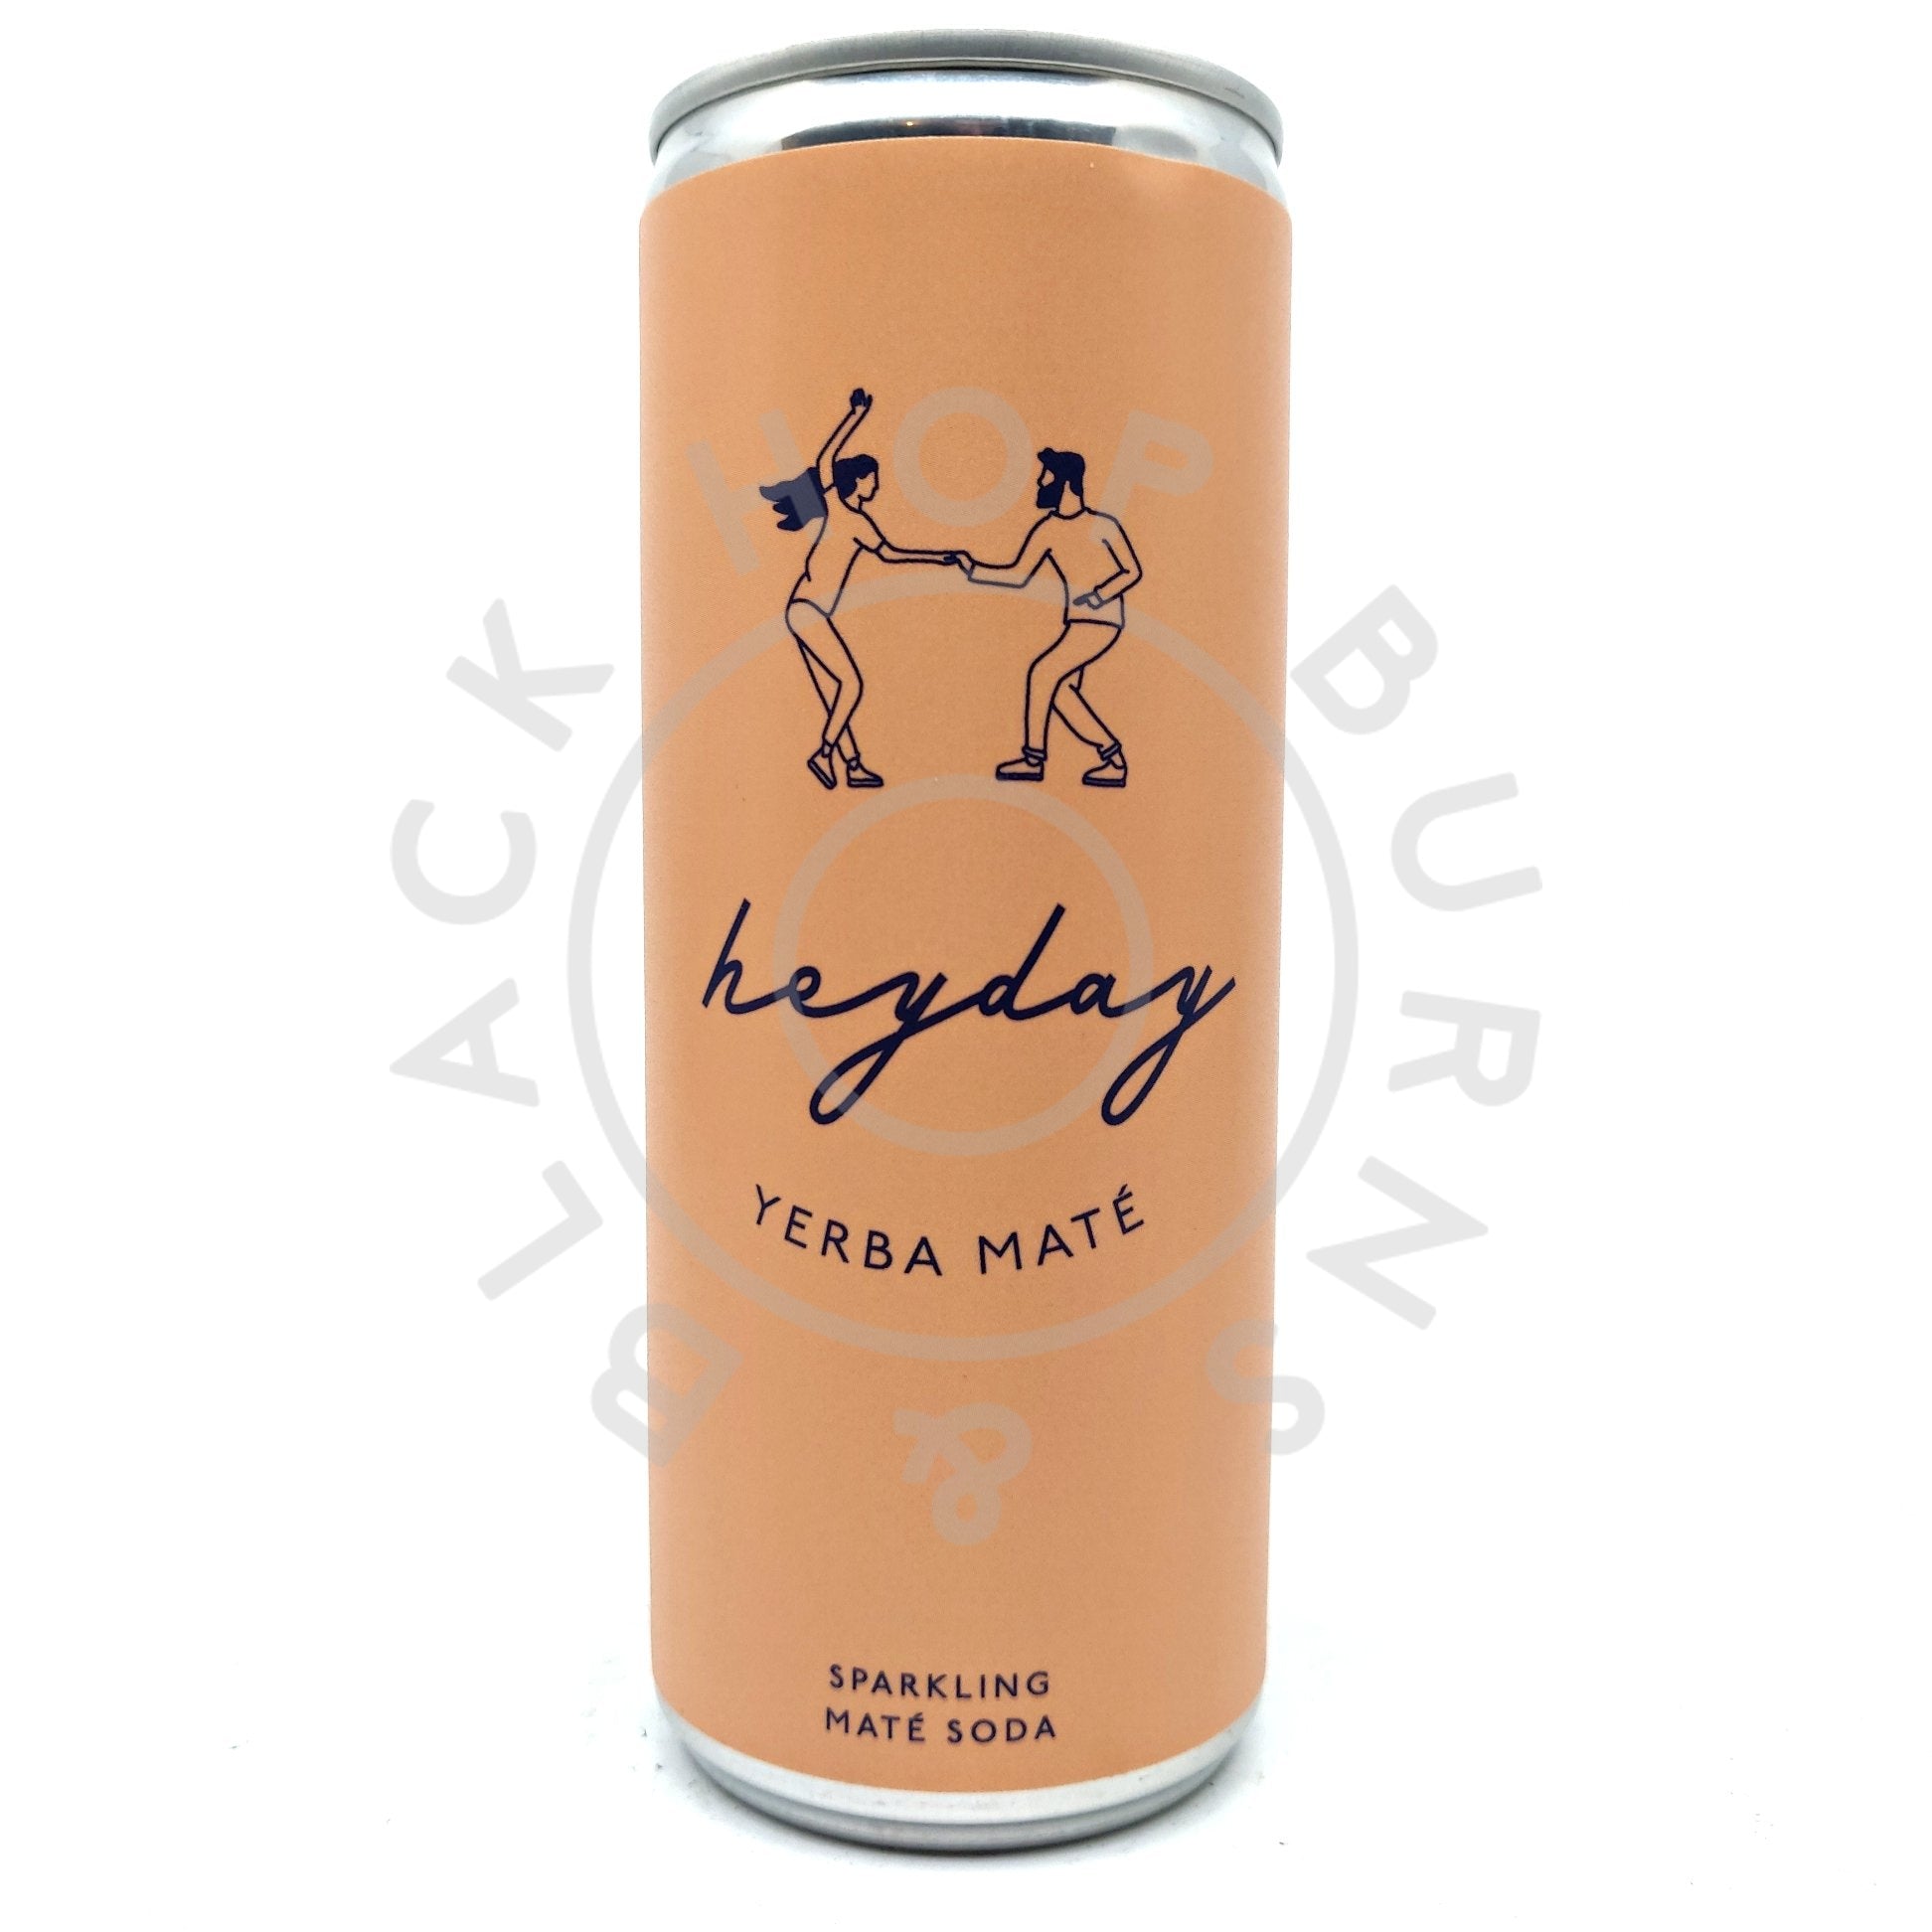 Heyday Yerba Mate Soda (250ml can)-Hop Burns & Black